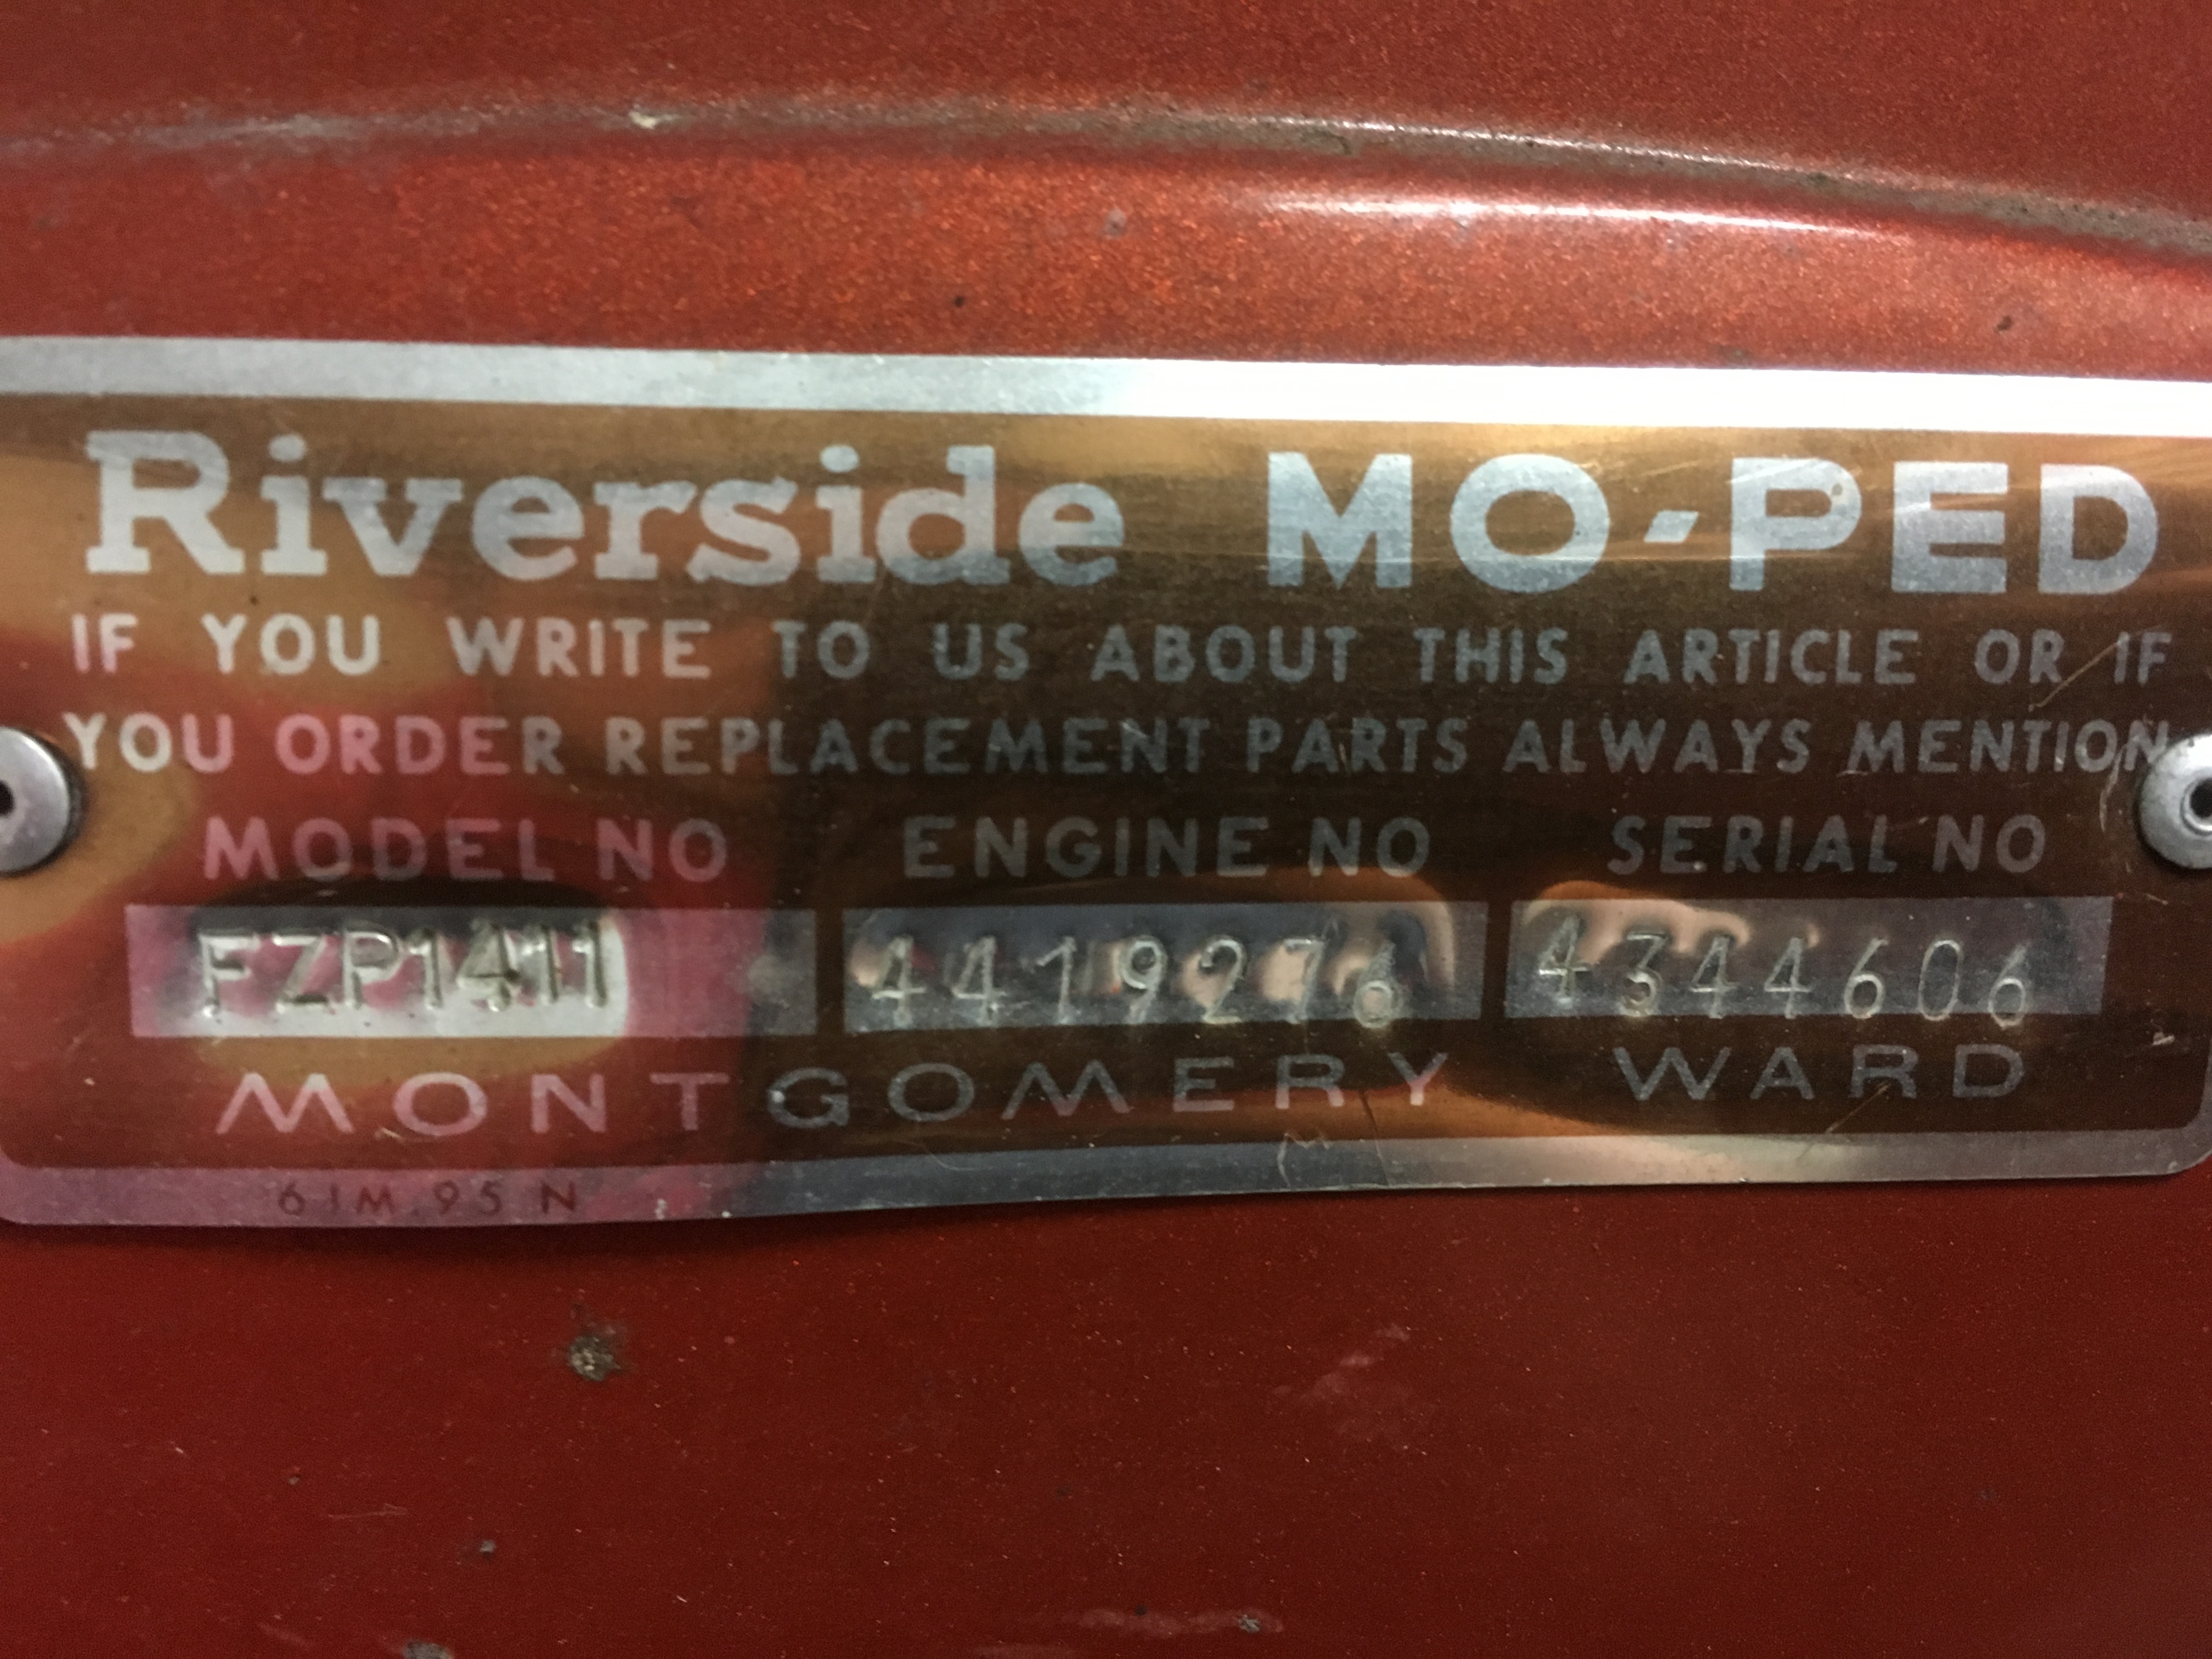 fzp-1411 Deluxe Mo-Ped Motobecane